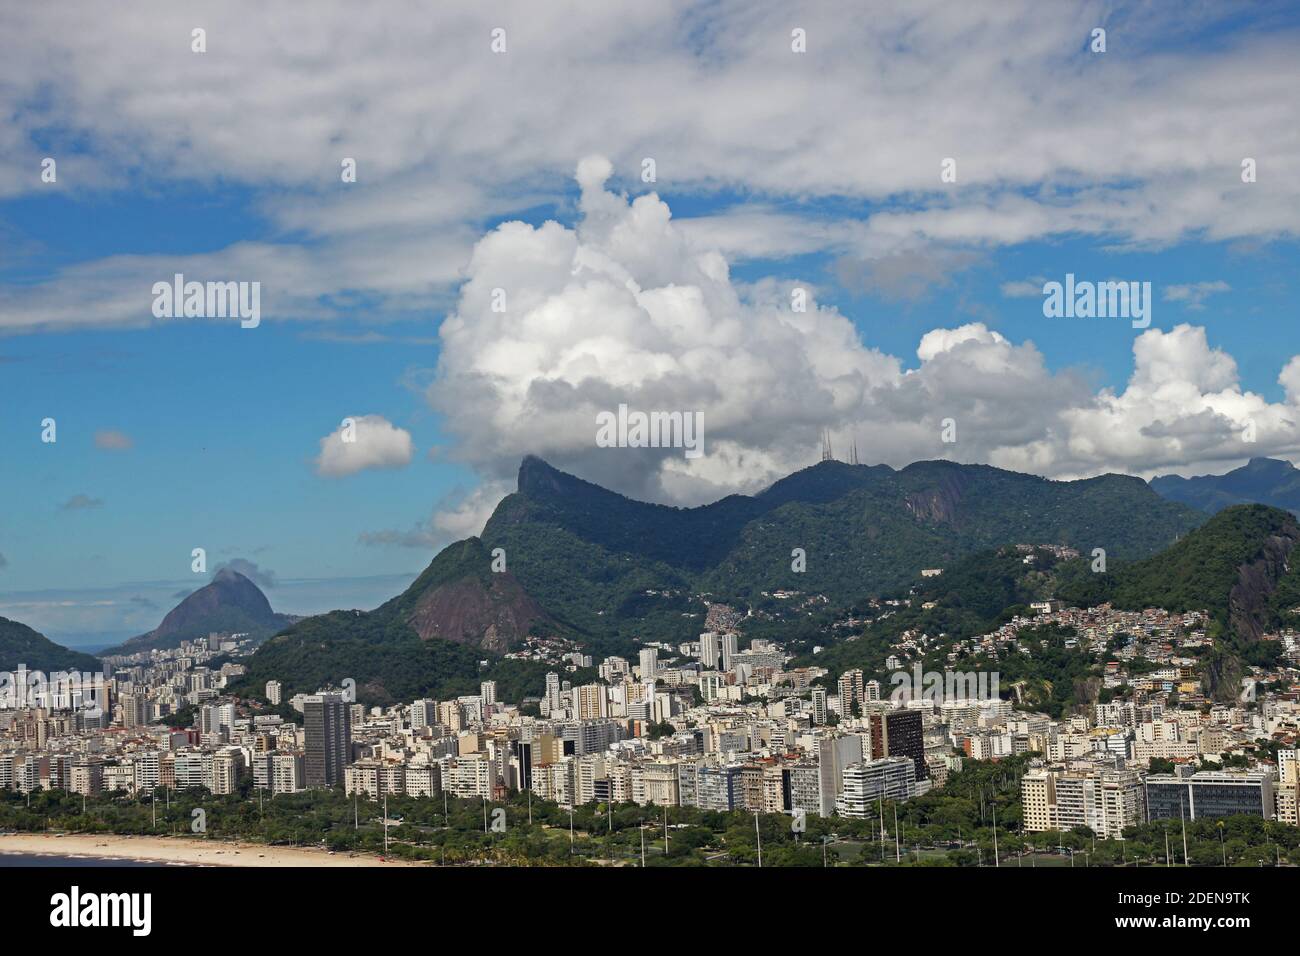 Rio de Janeiro - Largest international tourist destination in Brazil, Latin America and the entire Southern Hemisphere. Stock Photo